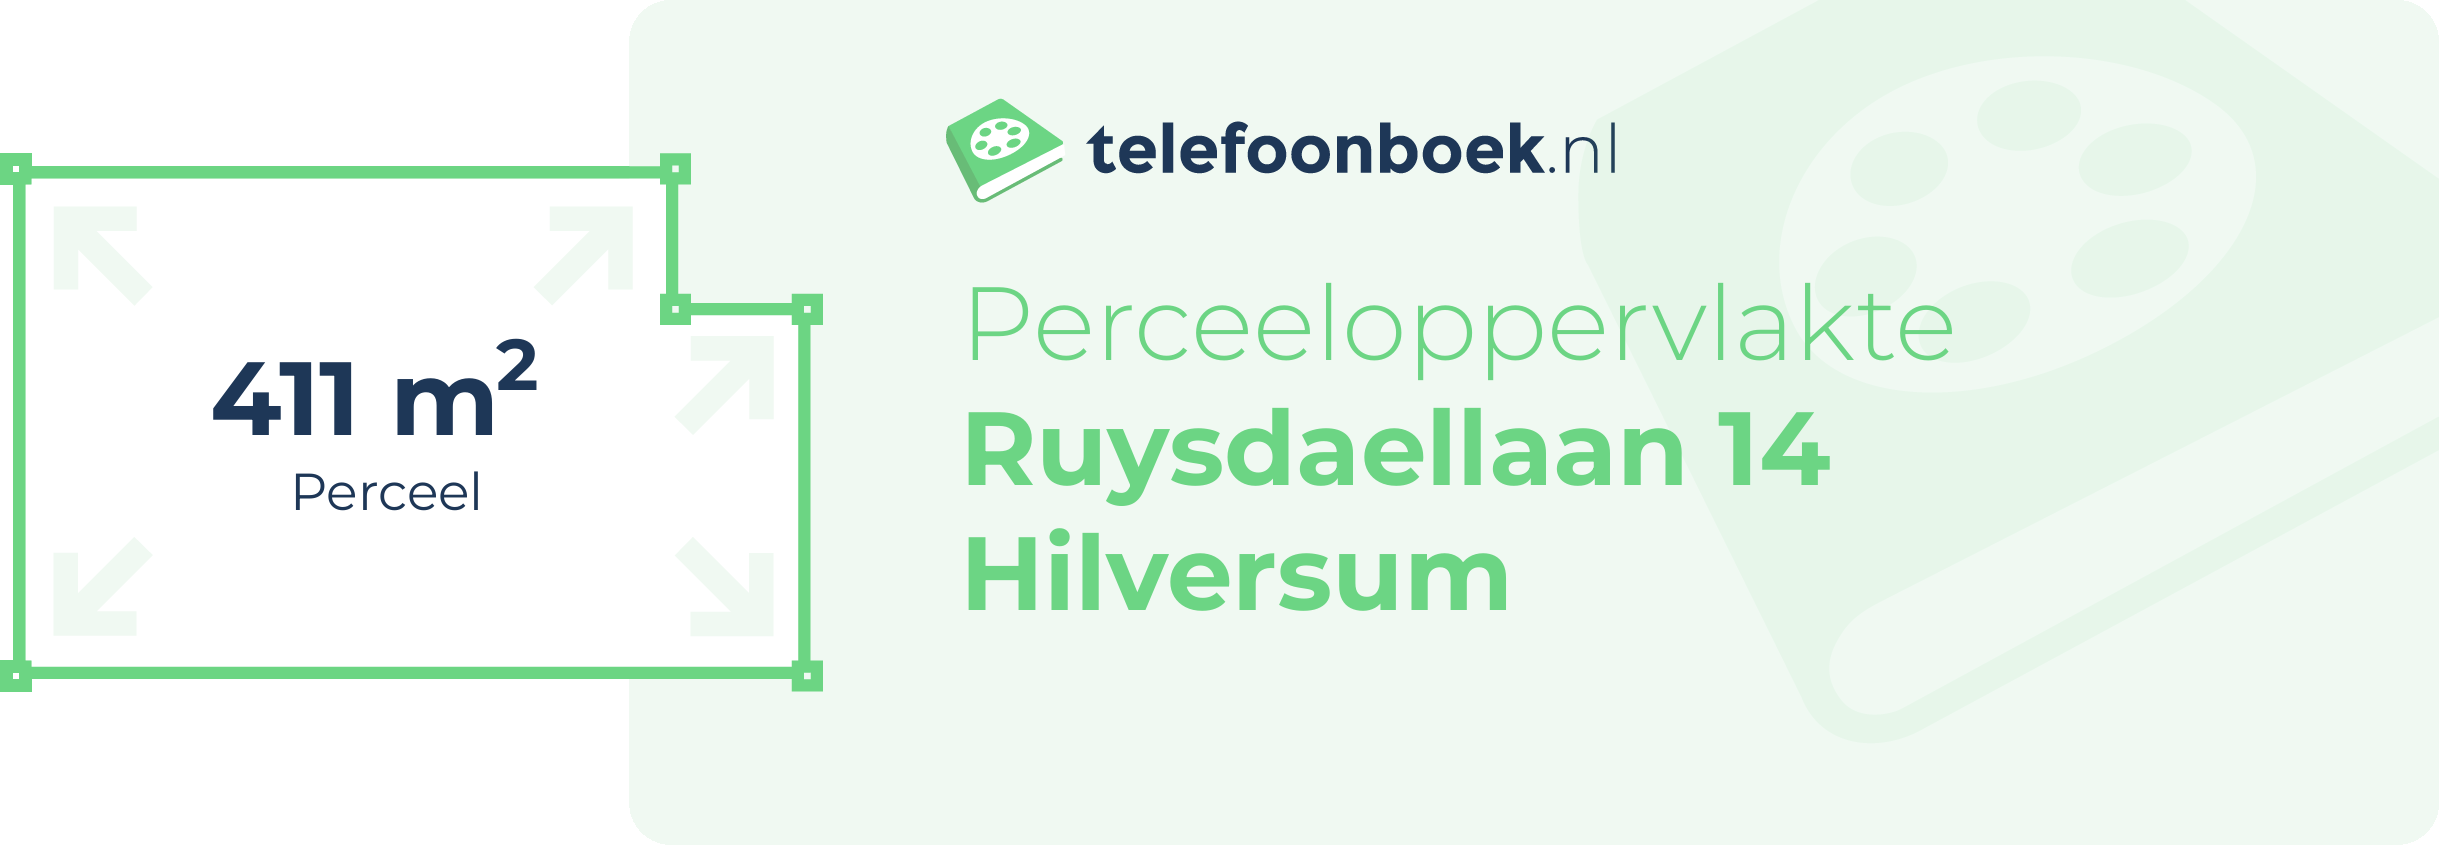 Perceeloppervlakte Ruysdaellaan 14 Hilversum